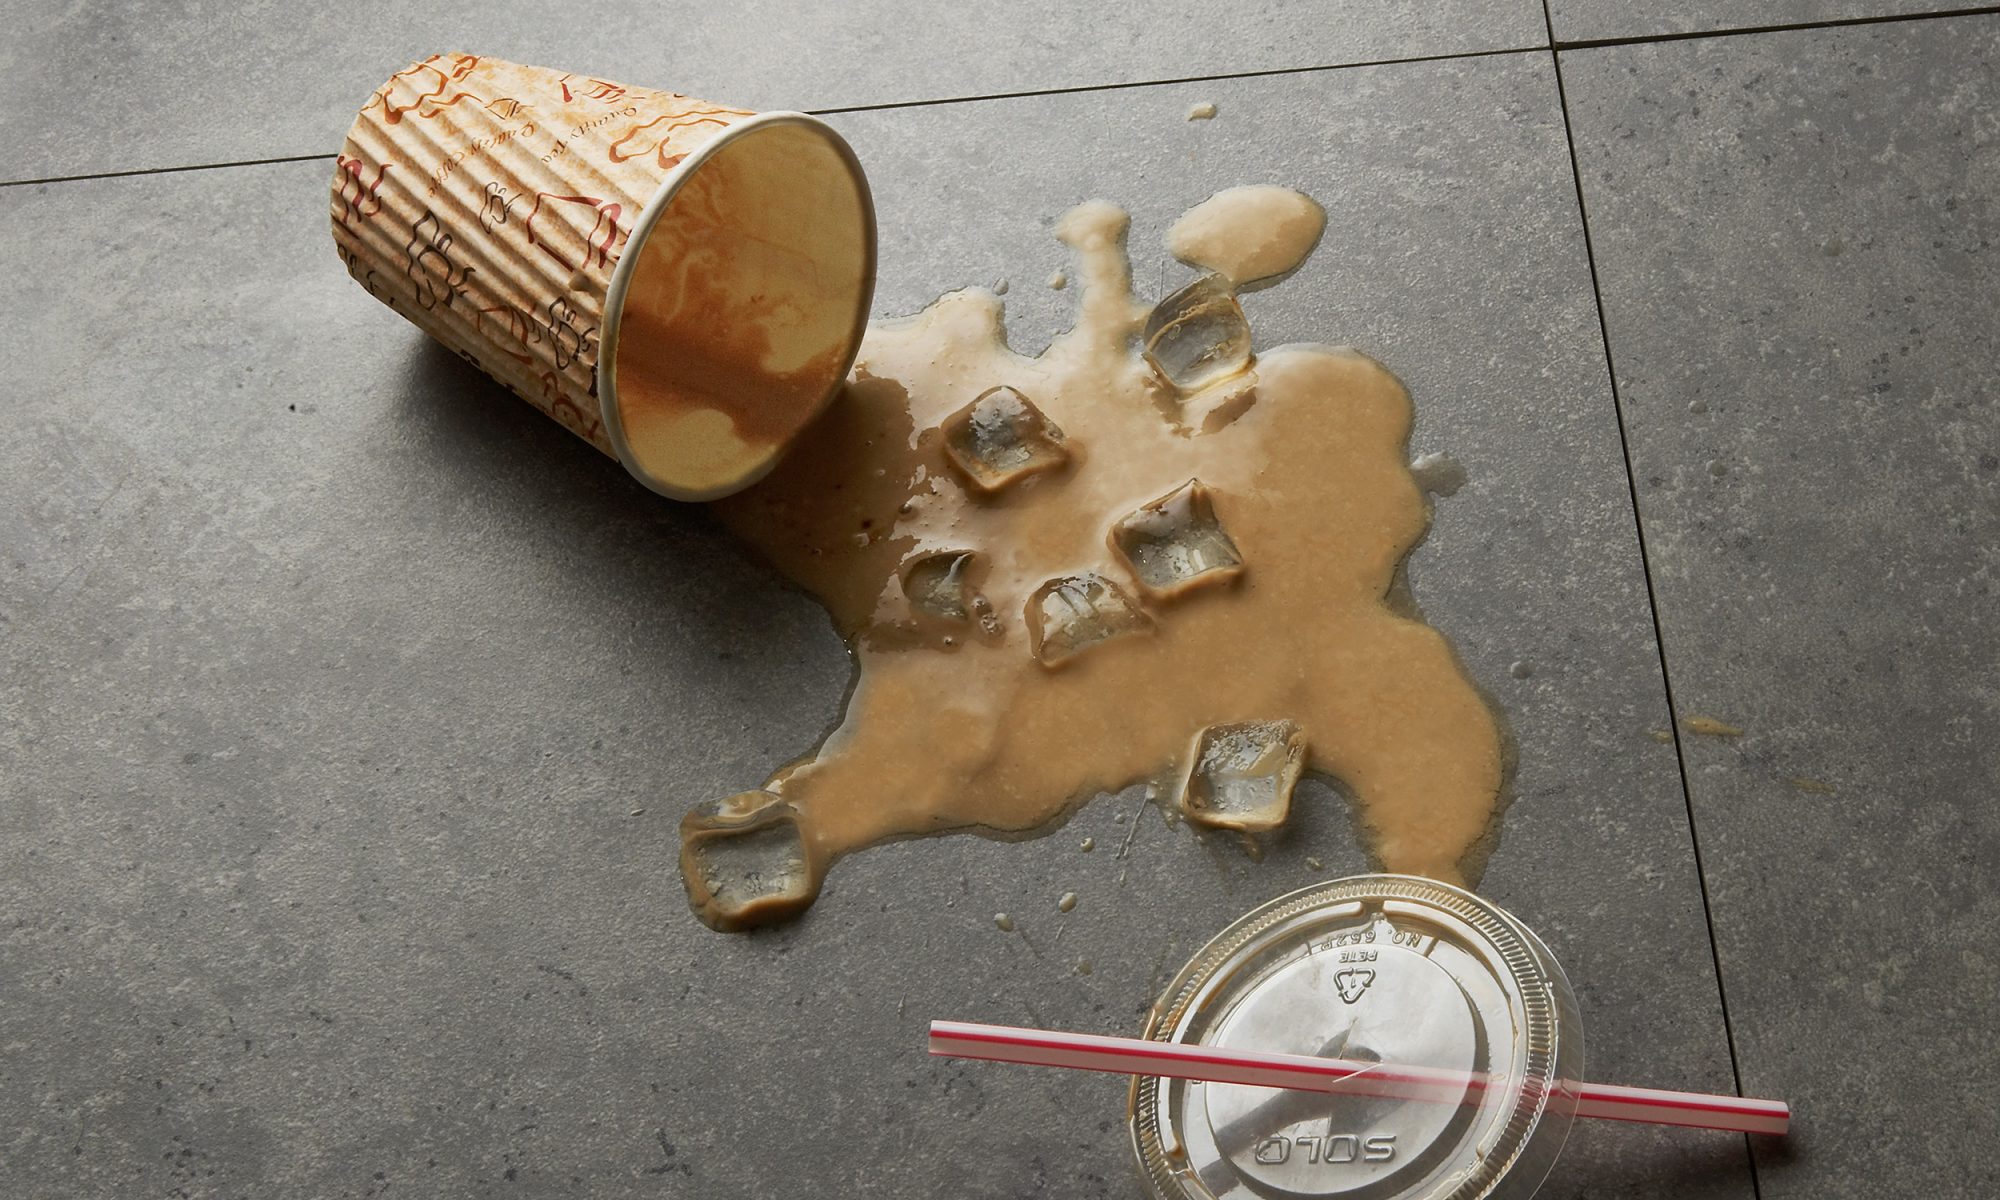 Starbucks Iced Coffee Spill